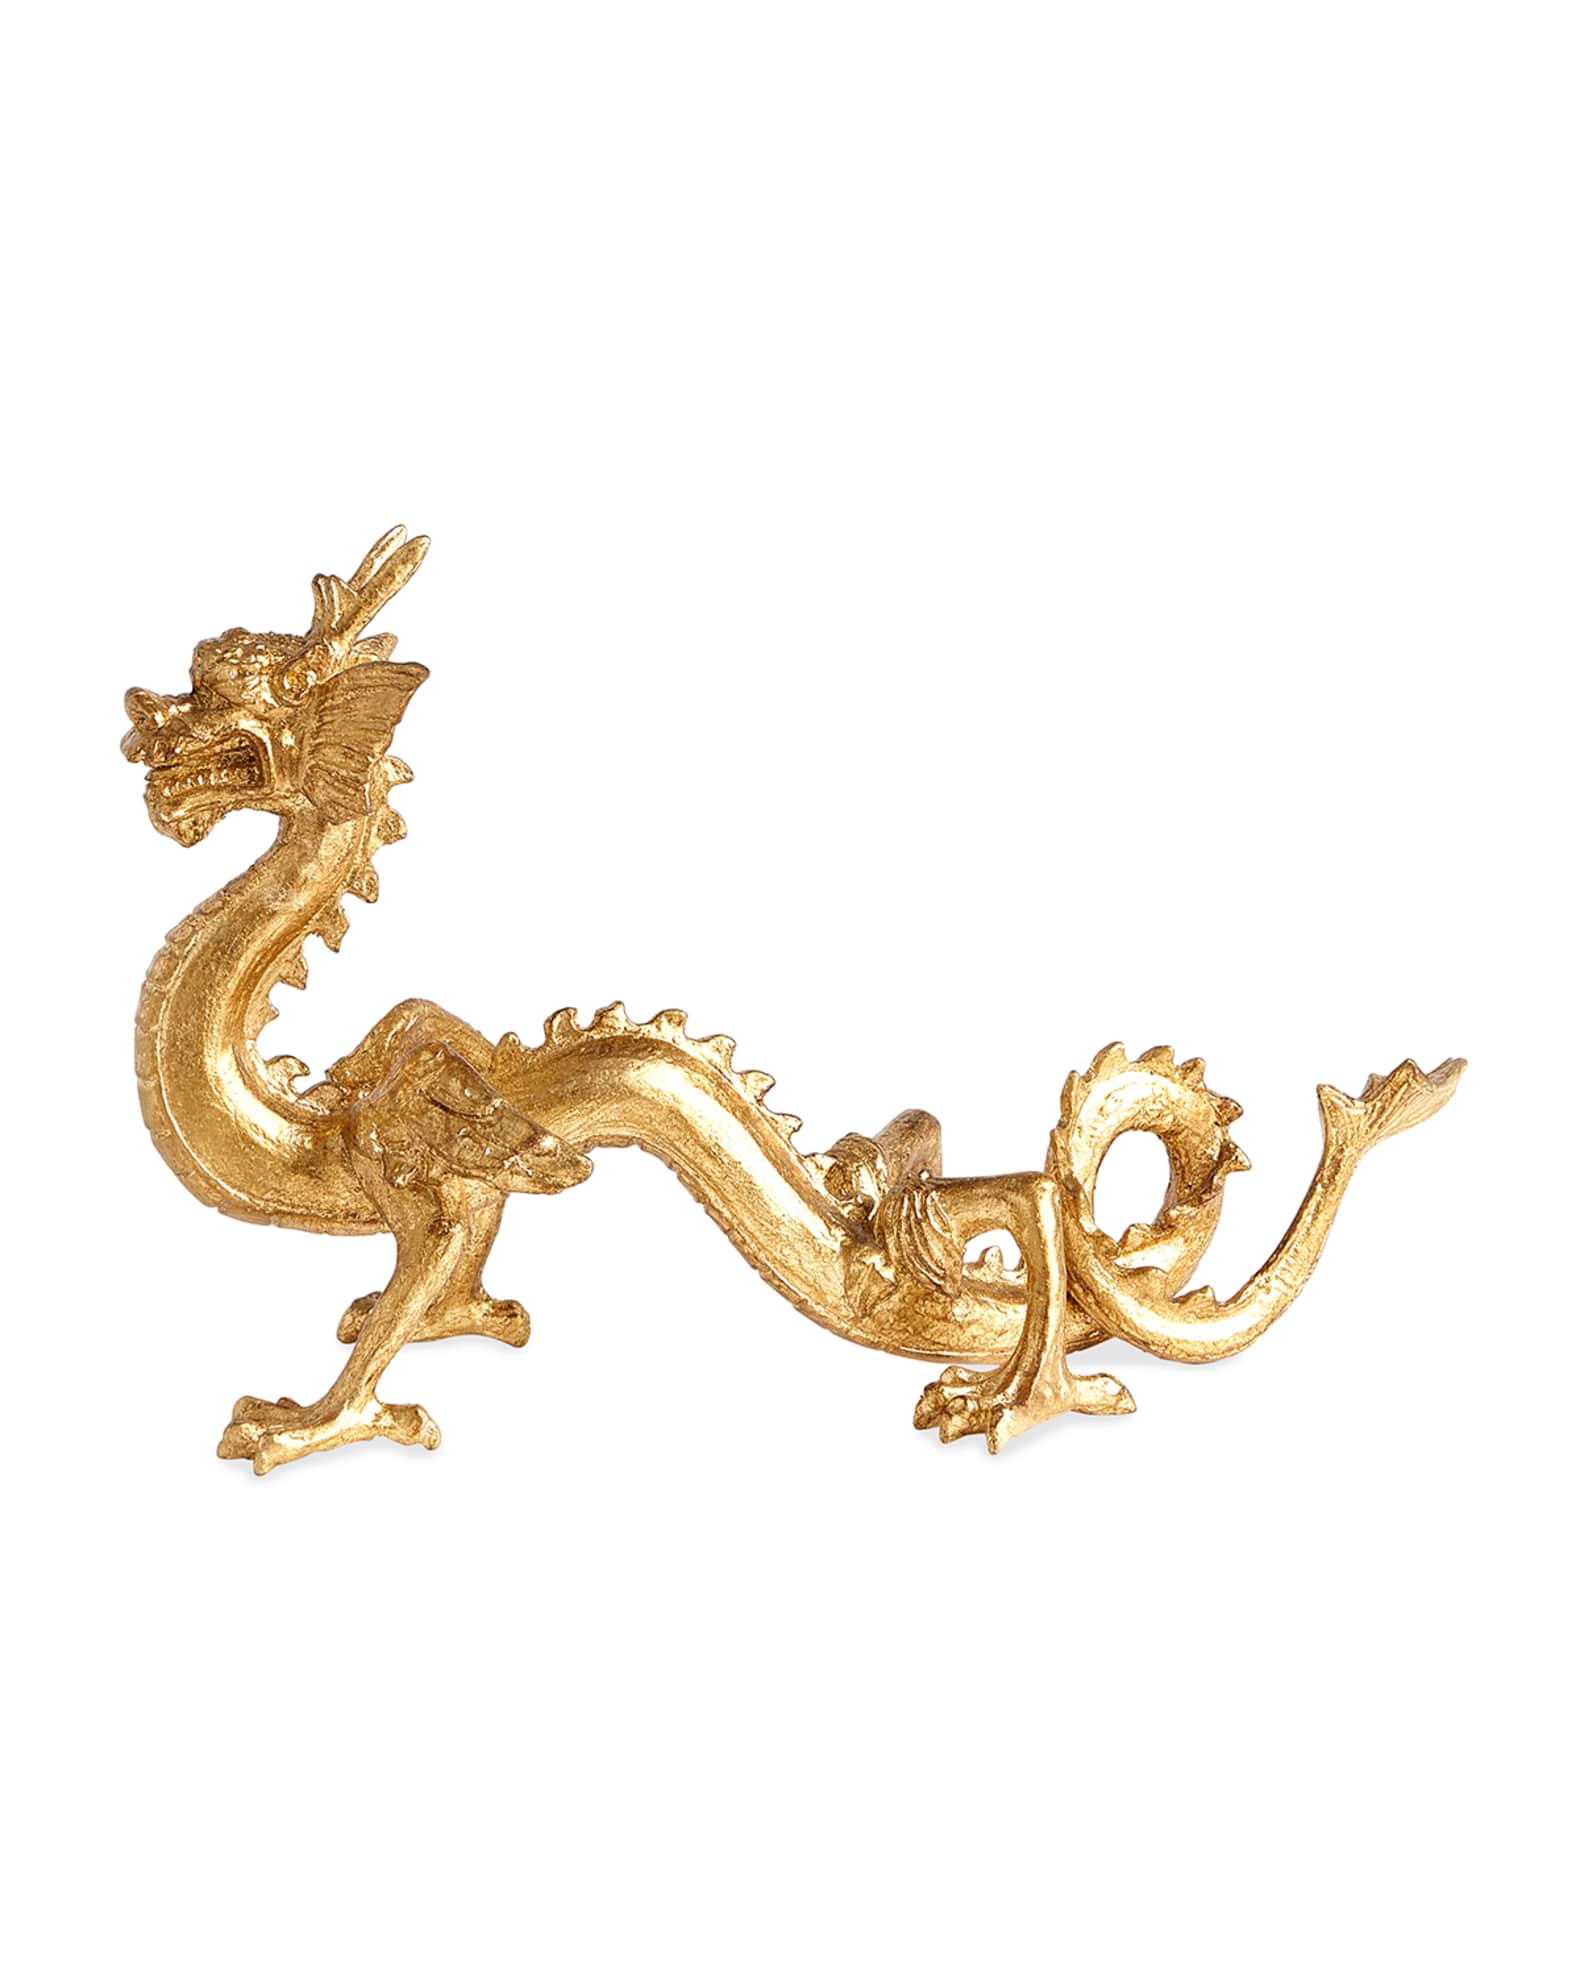 Global Views Standing Dragon Gold Leaf Sculpture | Neiman Marcus